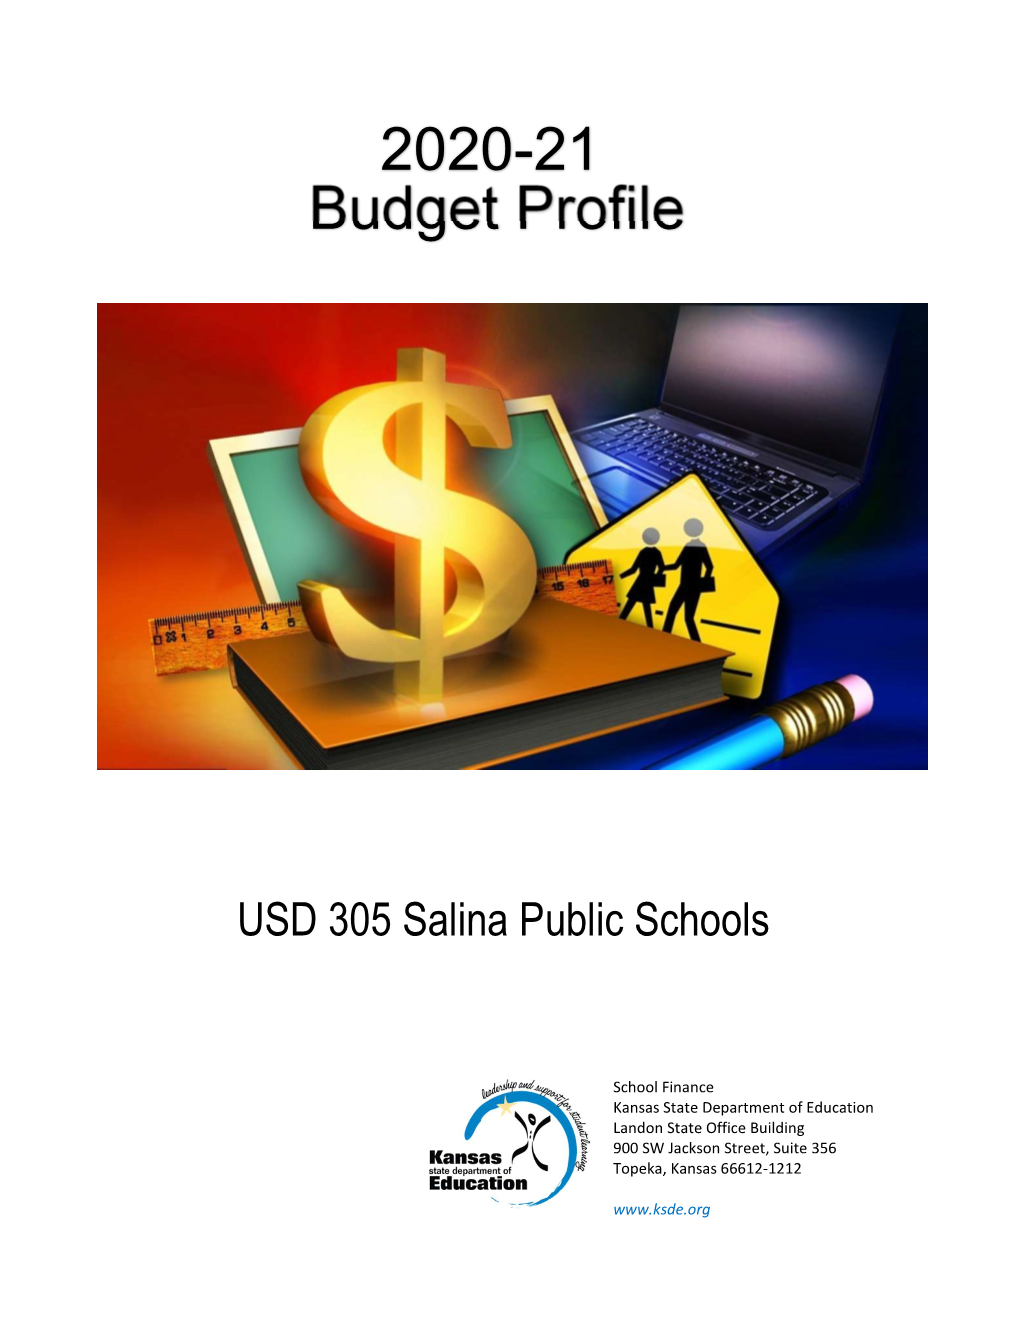 Budget Profile 2020-21